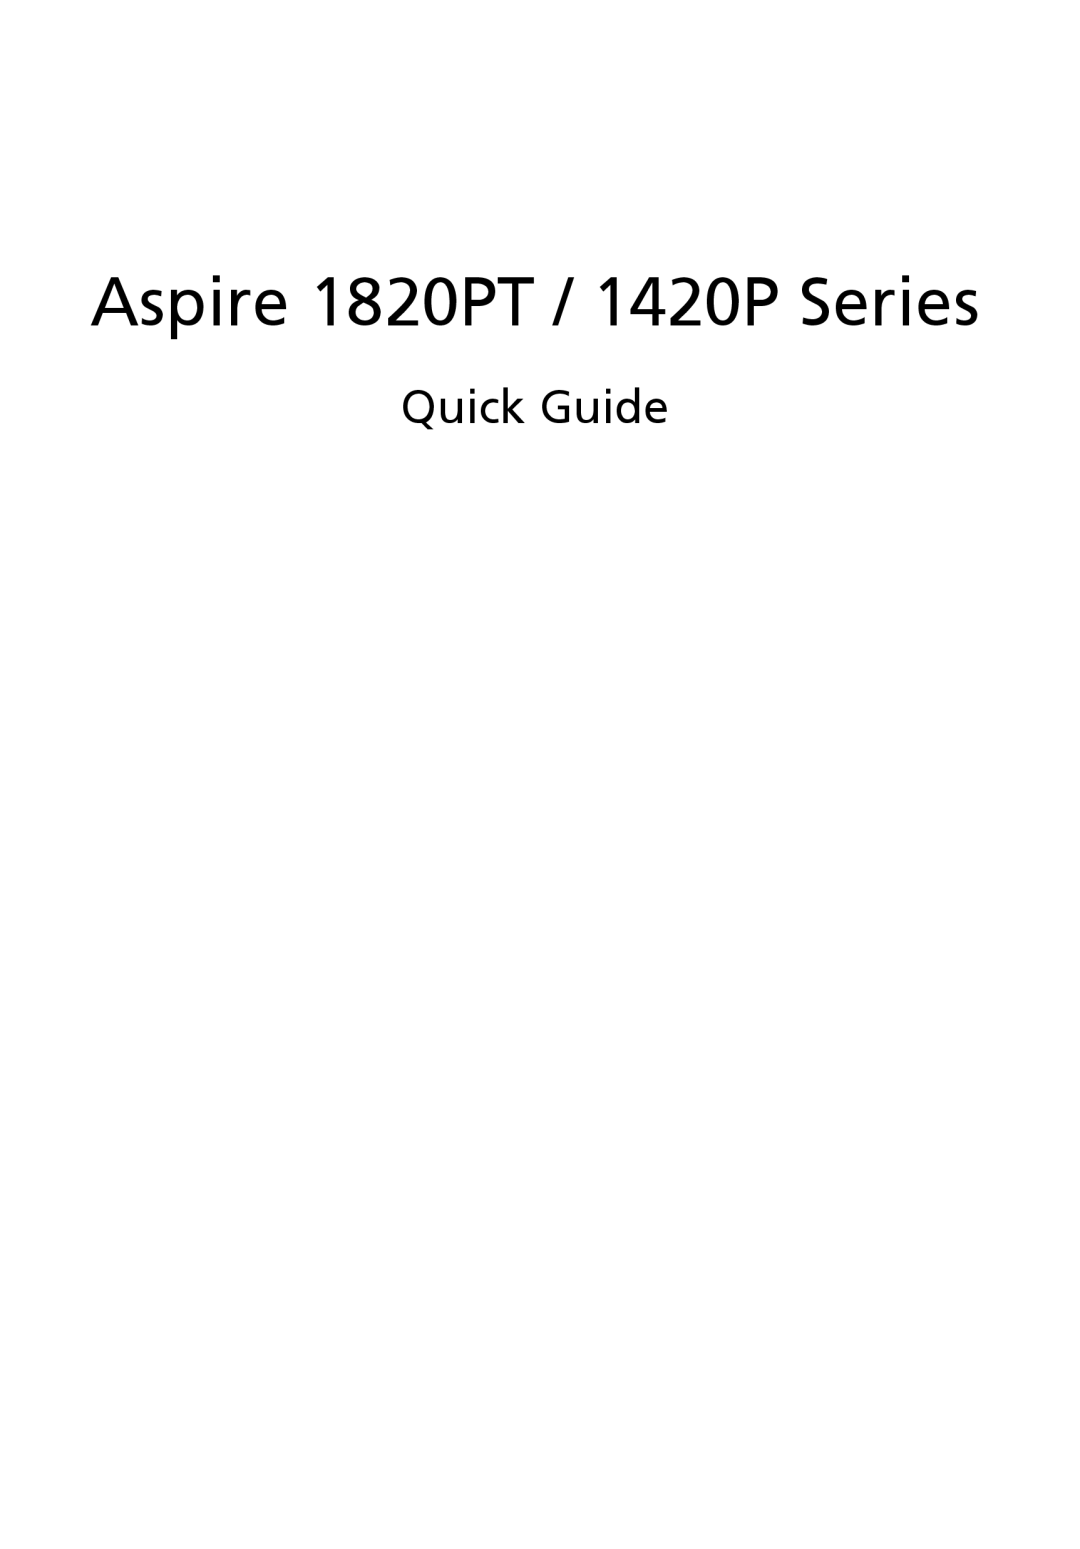 Acer 1820PTZ manual Quick Guide, Aspire 1820PT / 1420P Series 